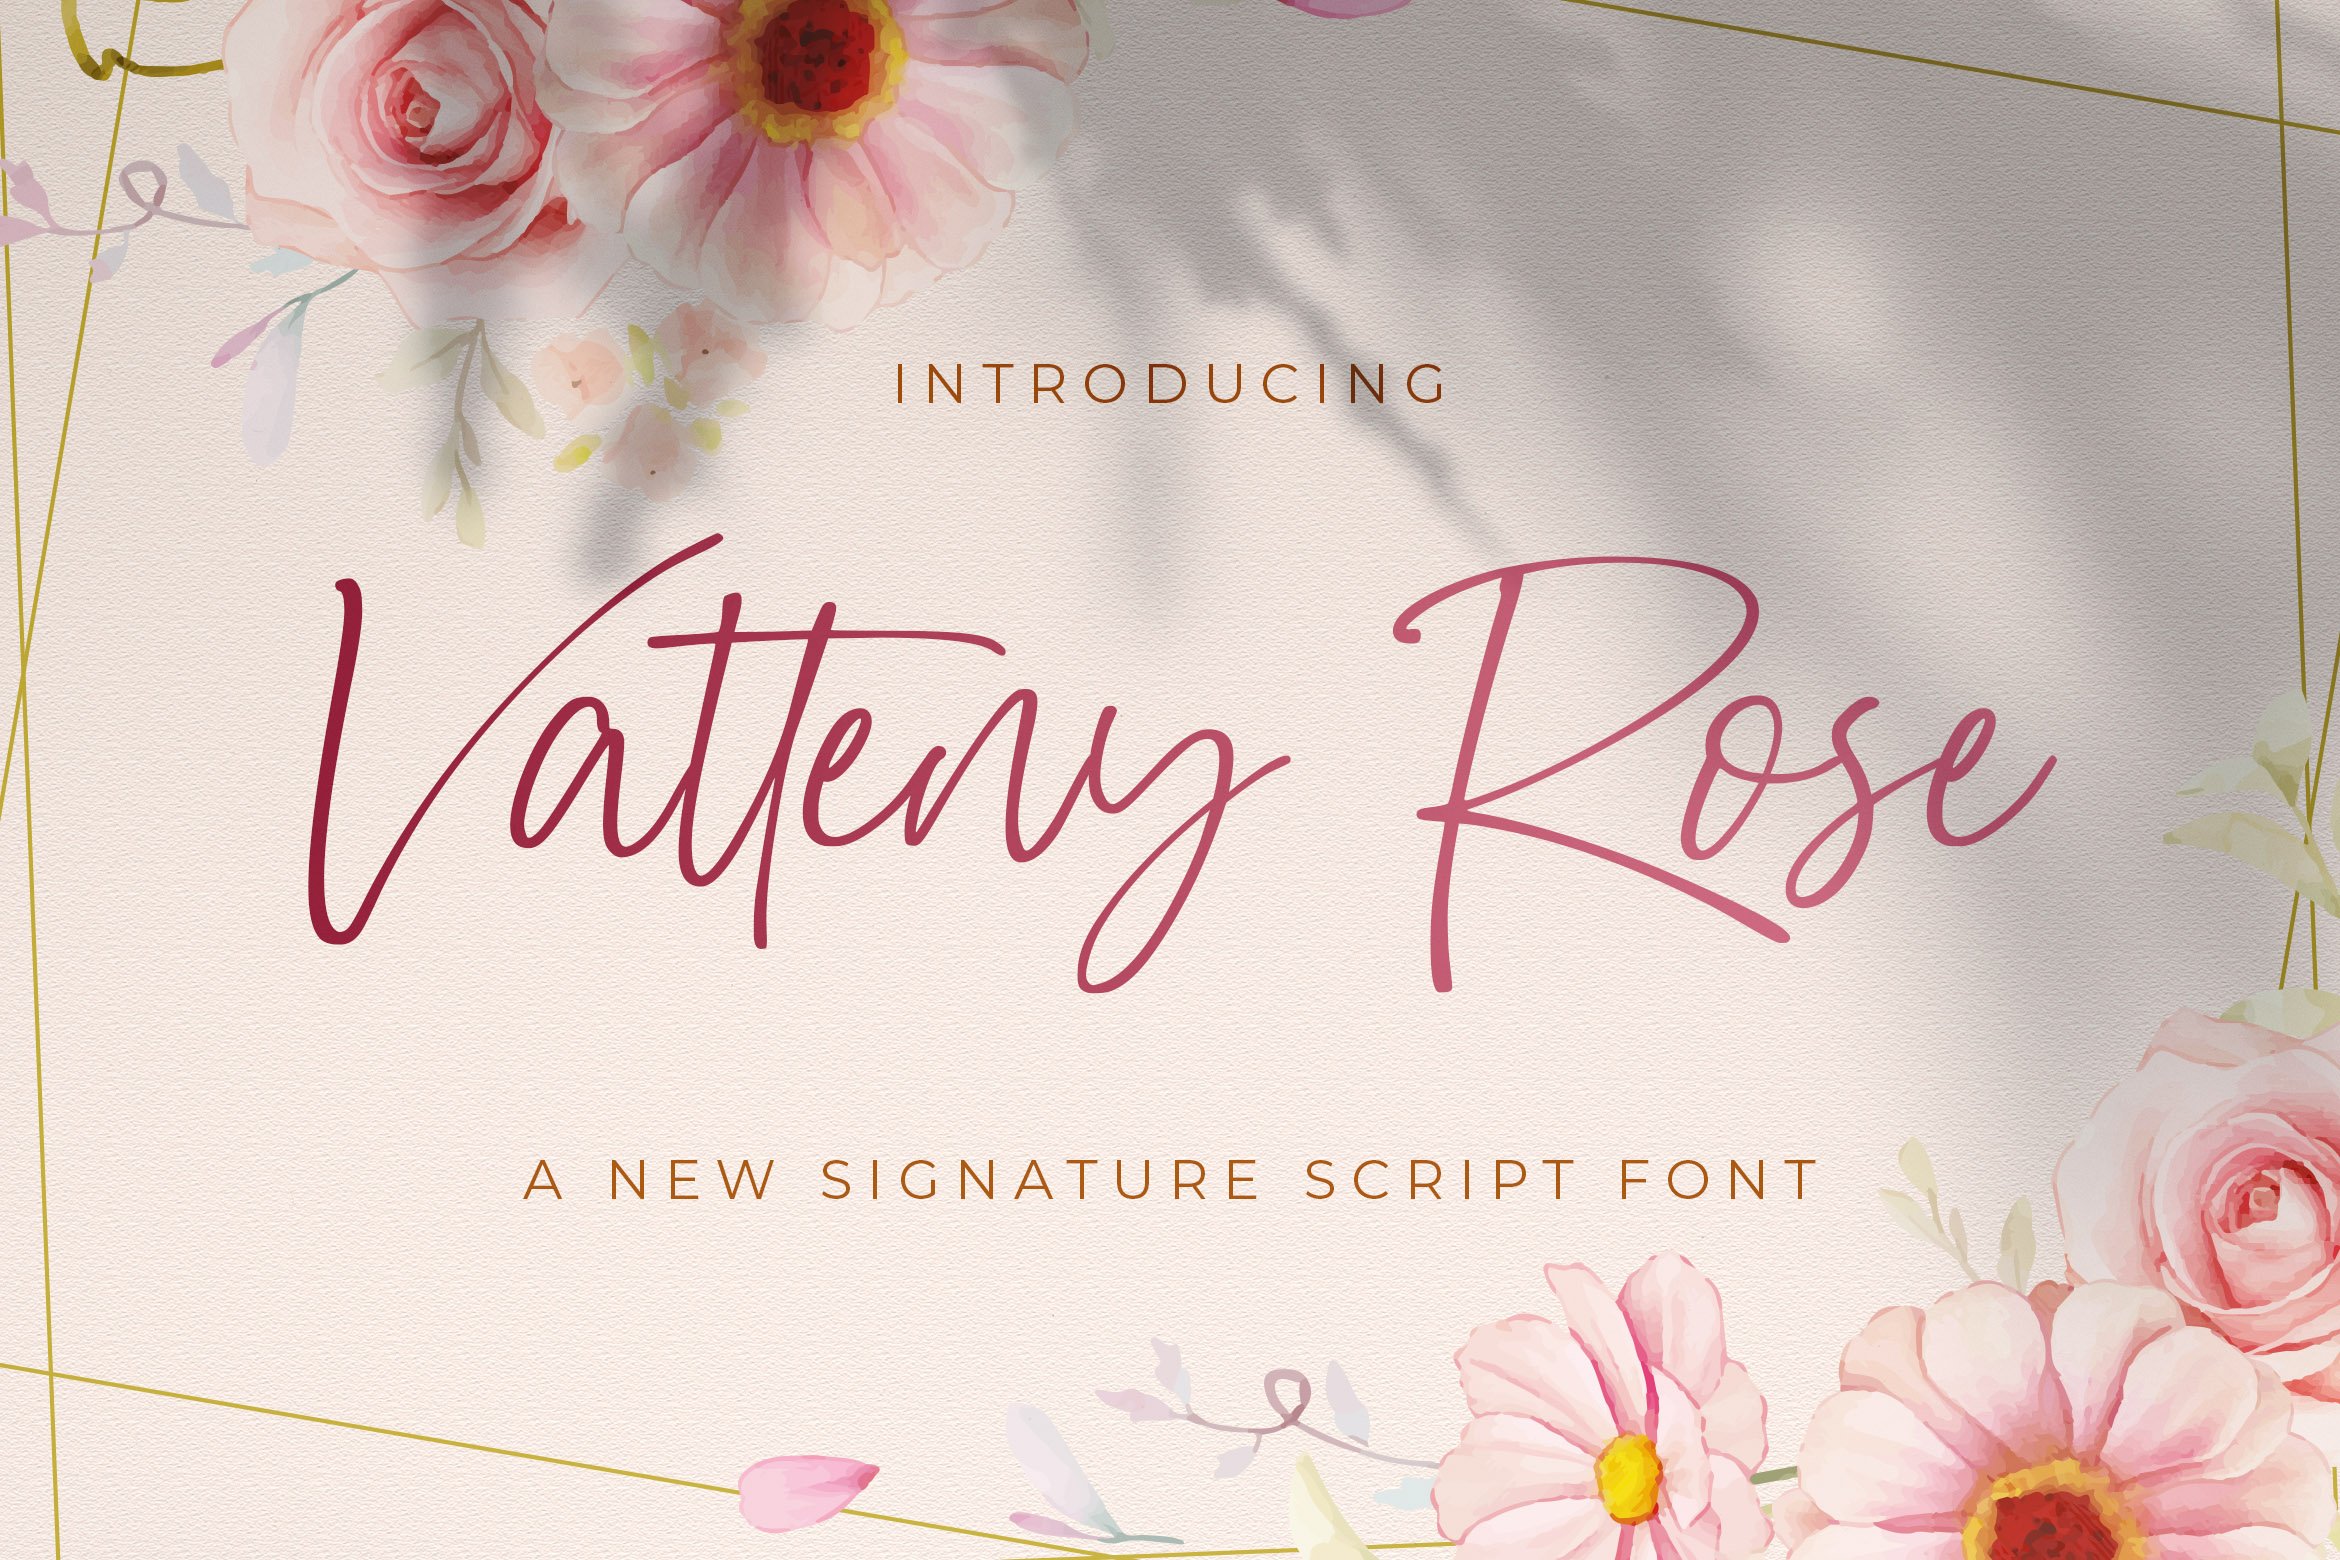 Vatteny Rose - Signature Script Font cover image.